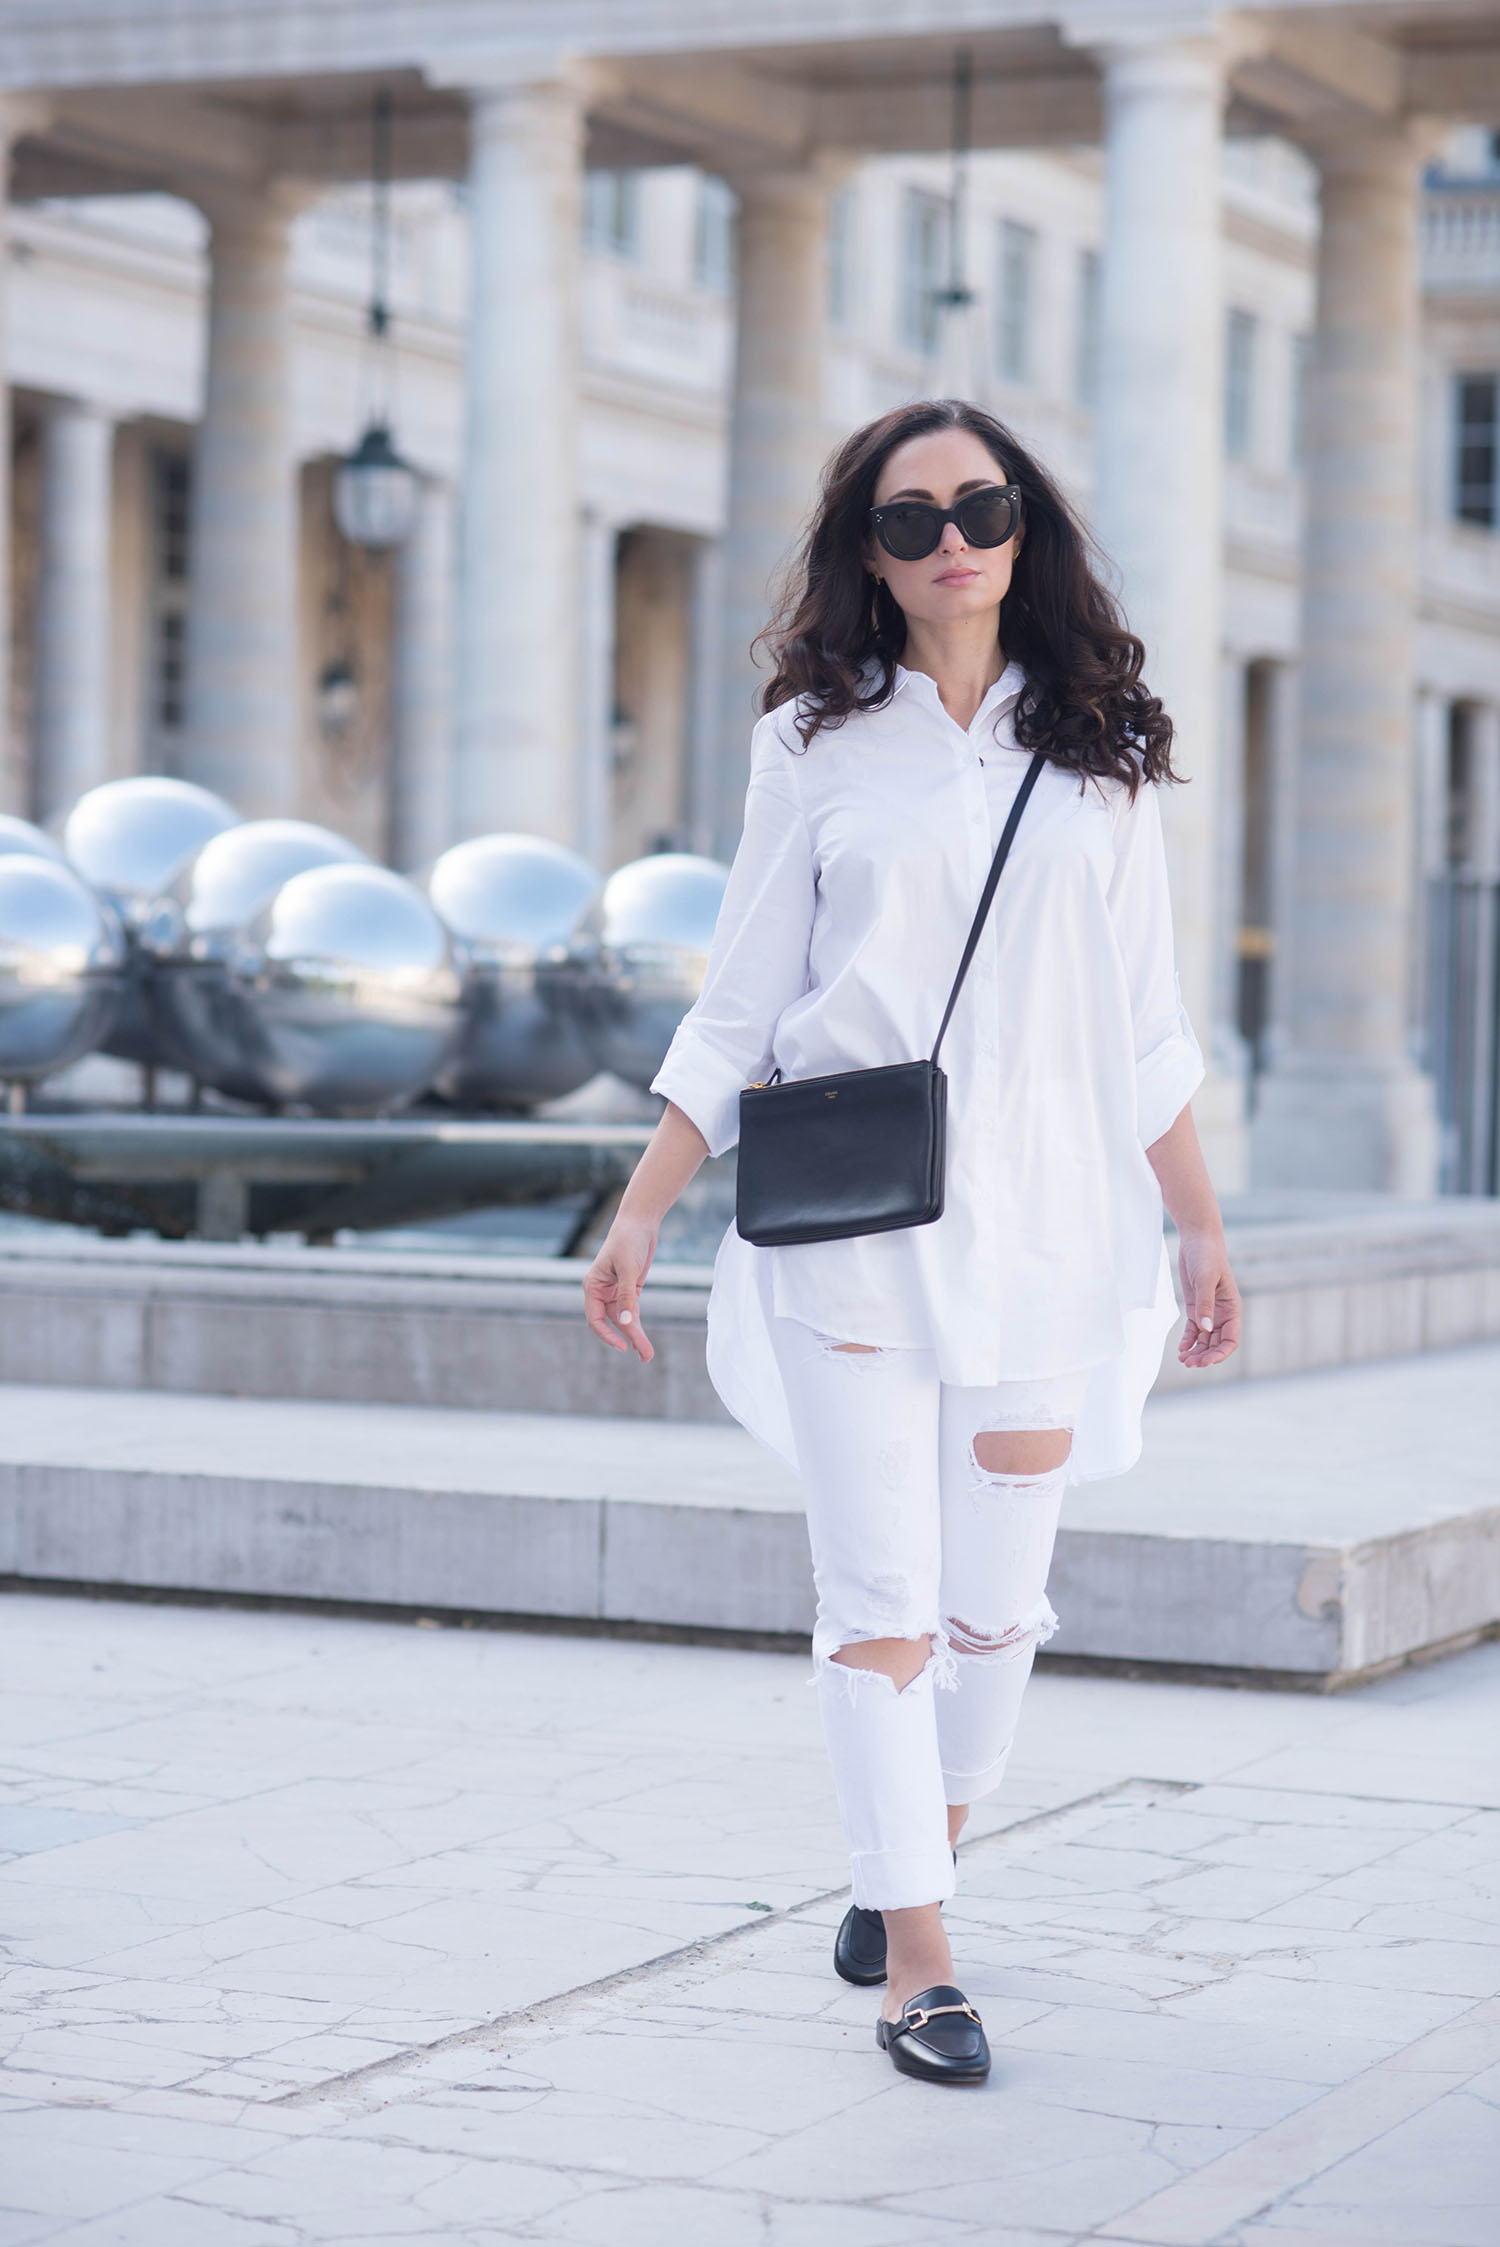 Winnipeg fashion blogger Cee Fardoe of Coco & Vera walks through the Palais Royal in Paris wearing white Grlfrnd Karolina jeans and carrying a Celine trio bag